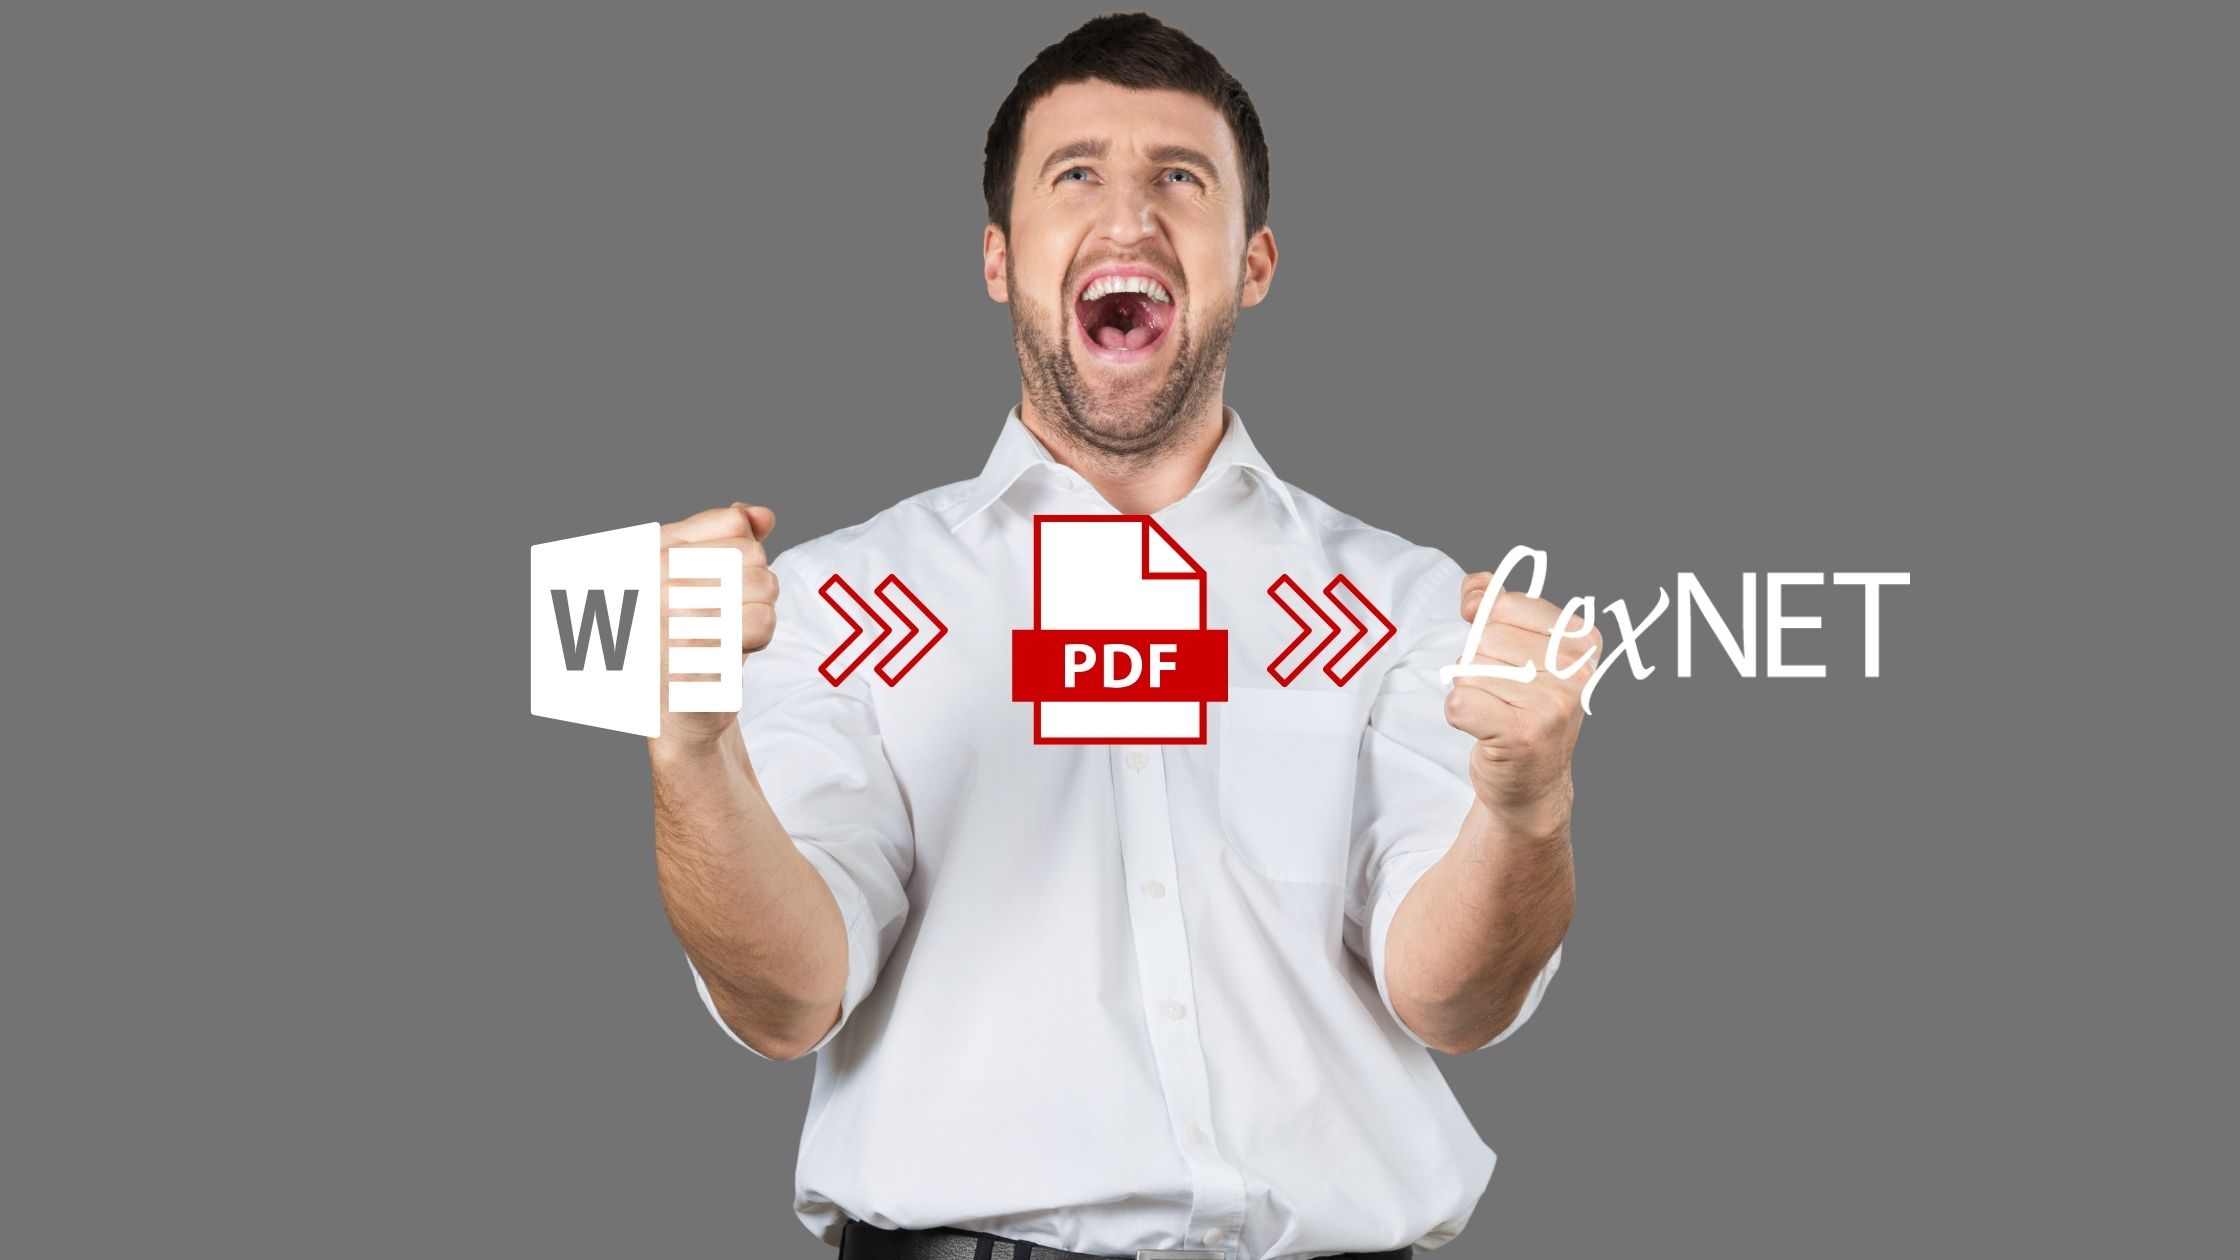 Convertir documentos de Word a PDF para presentarlos en LexNet